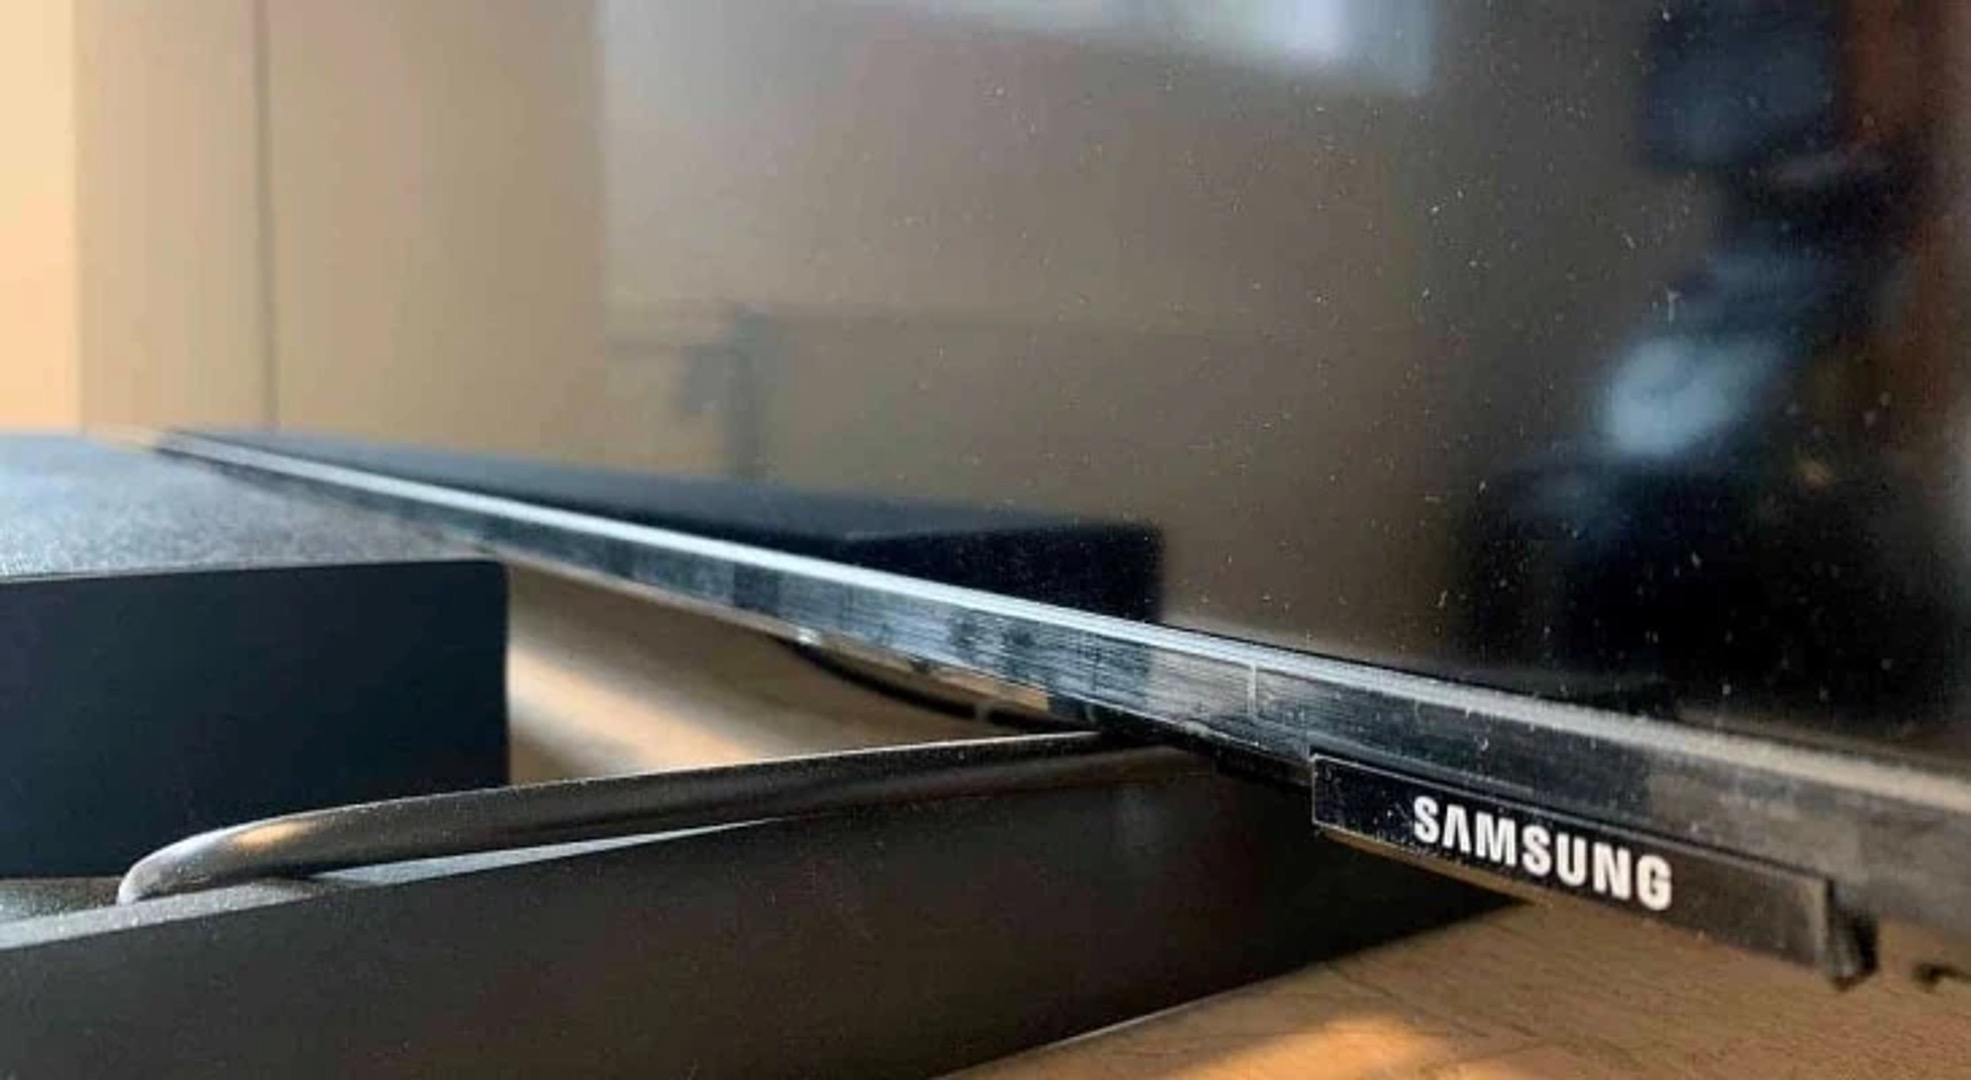 Why Won’t My Samsung LED TV Power On